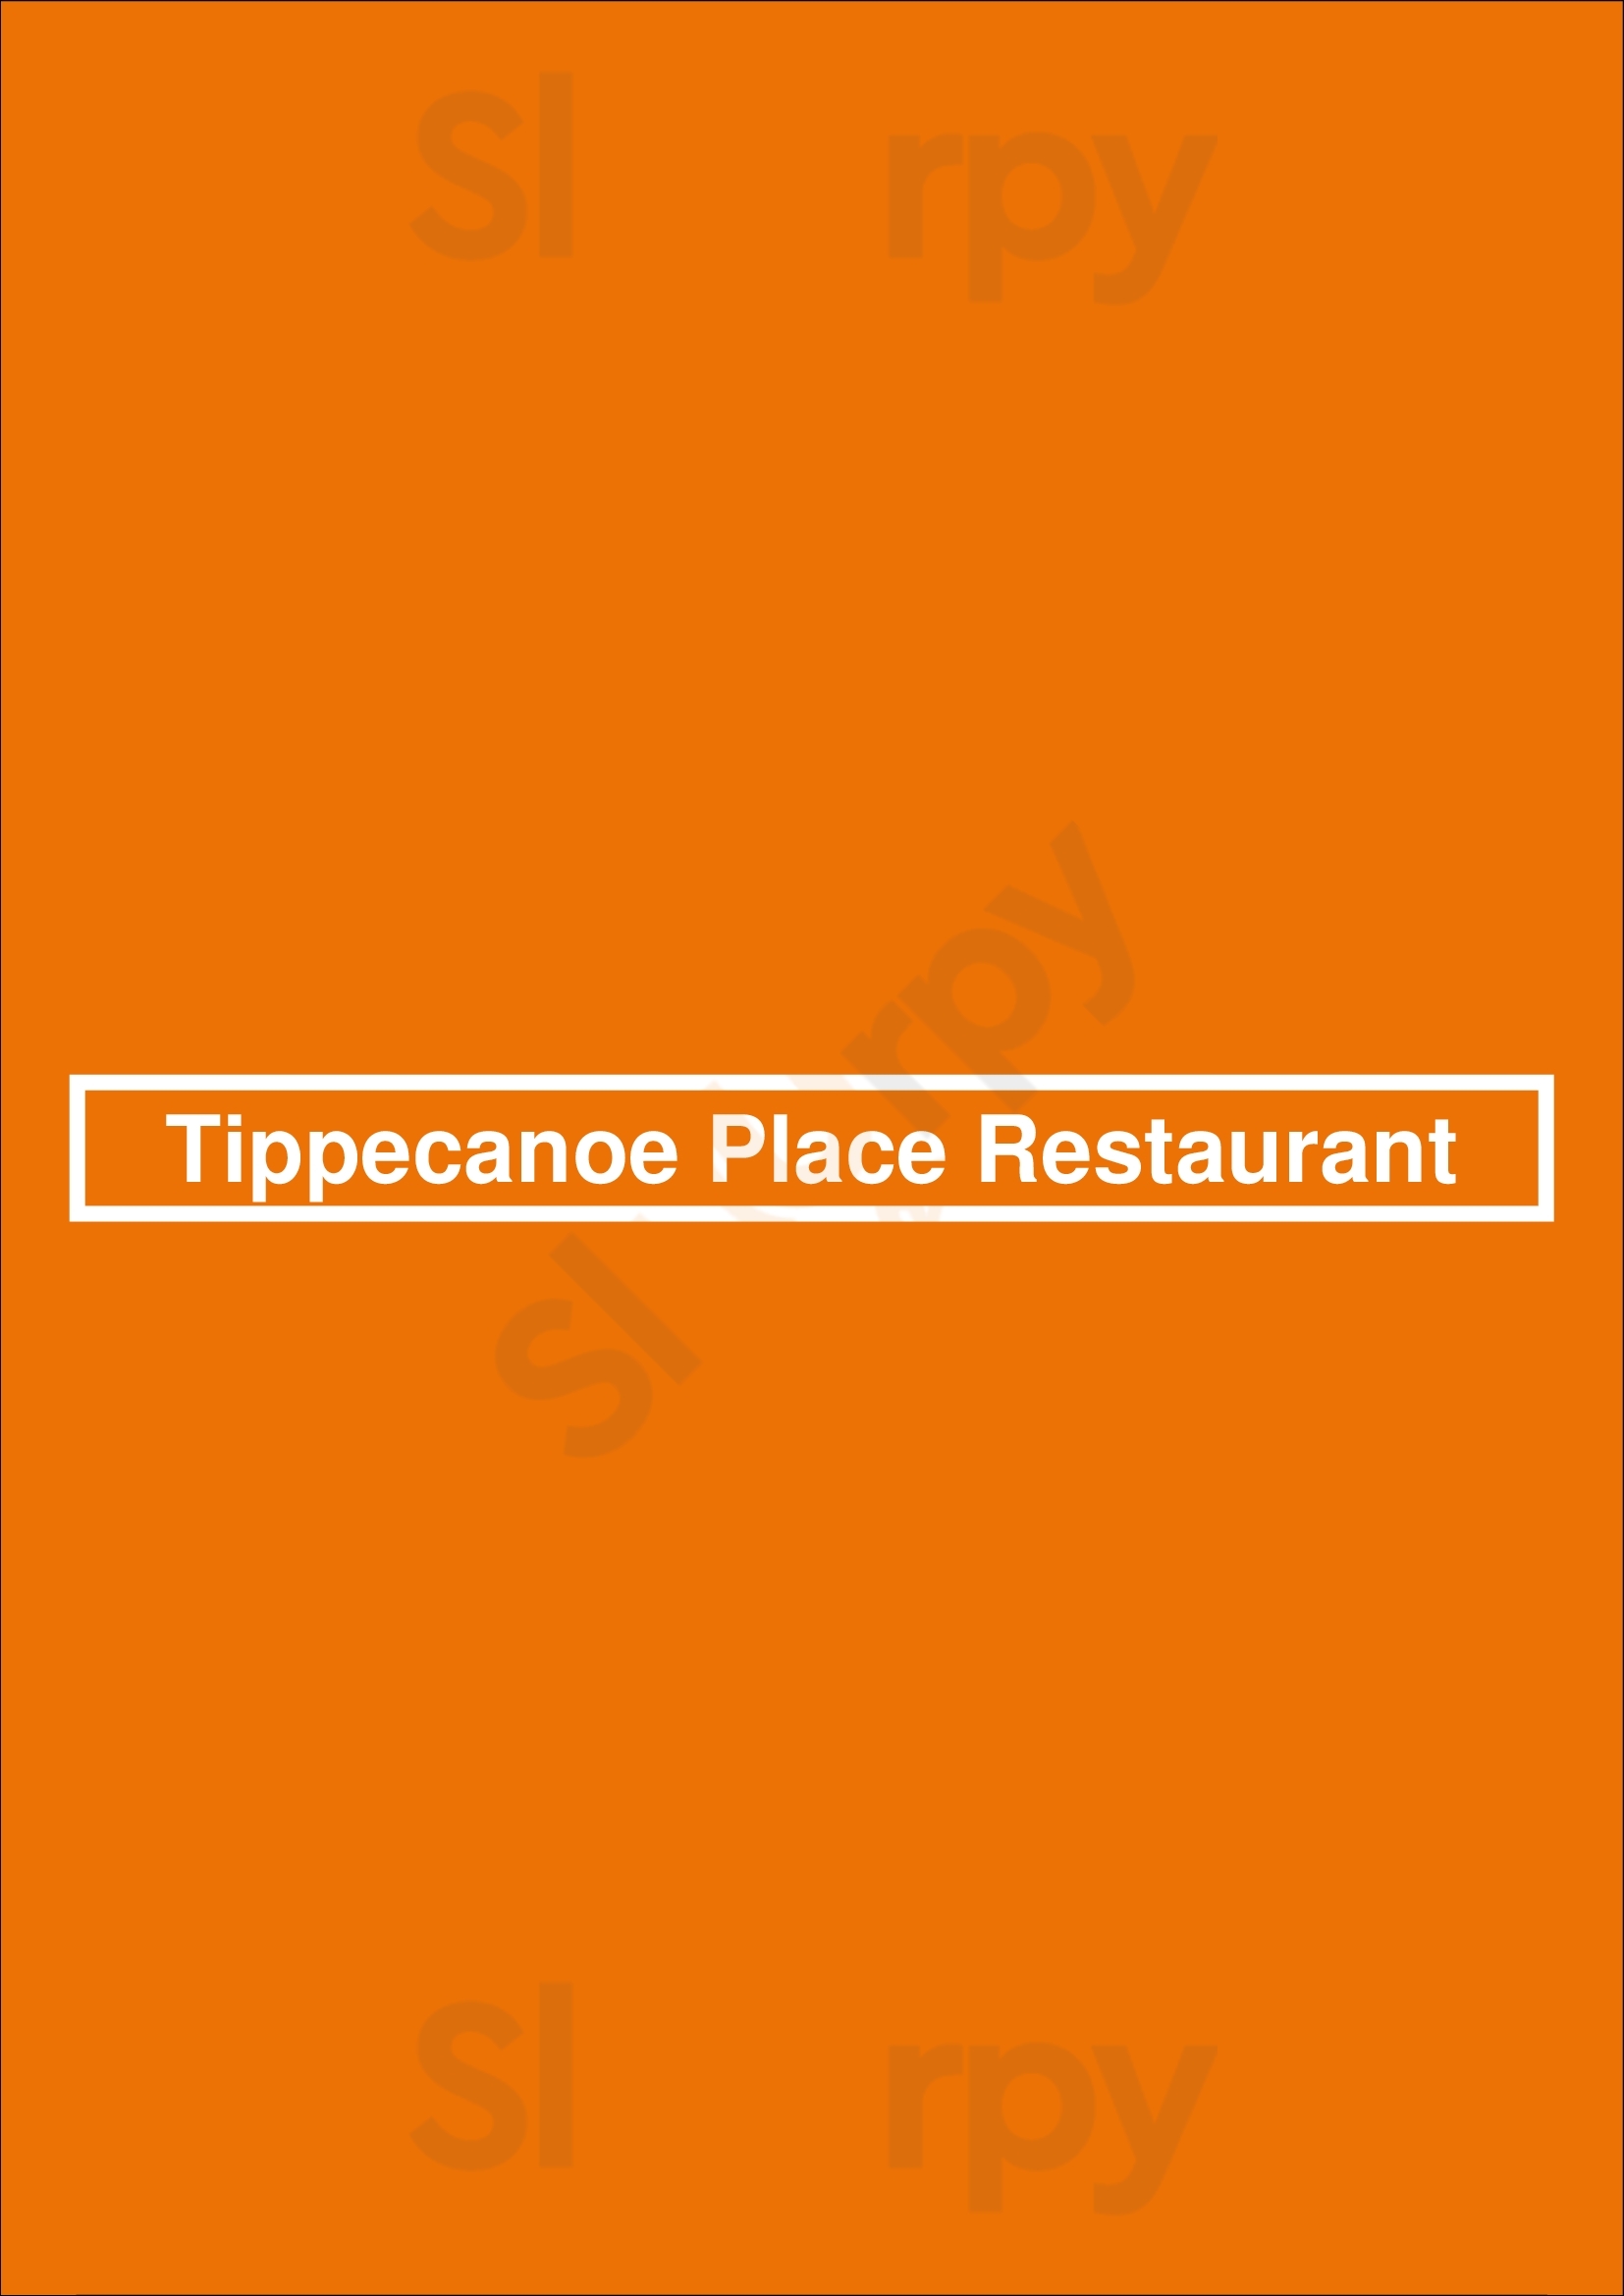 Tippecanoe Place Restaurant South Bend Menu - 1